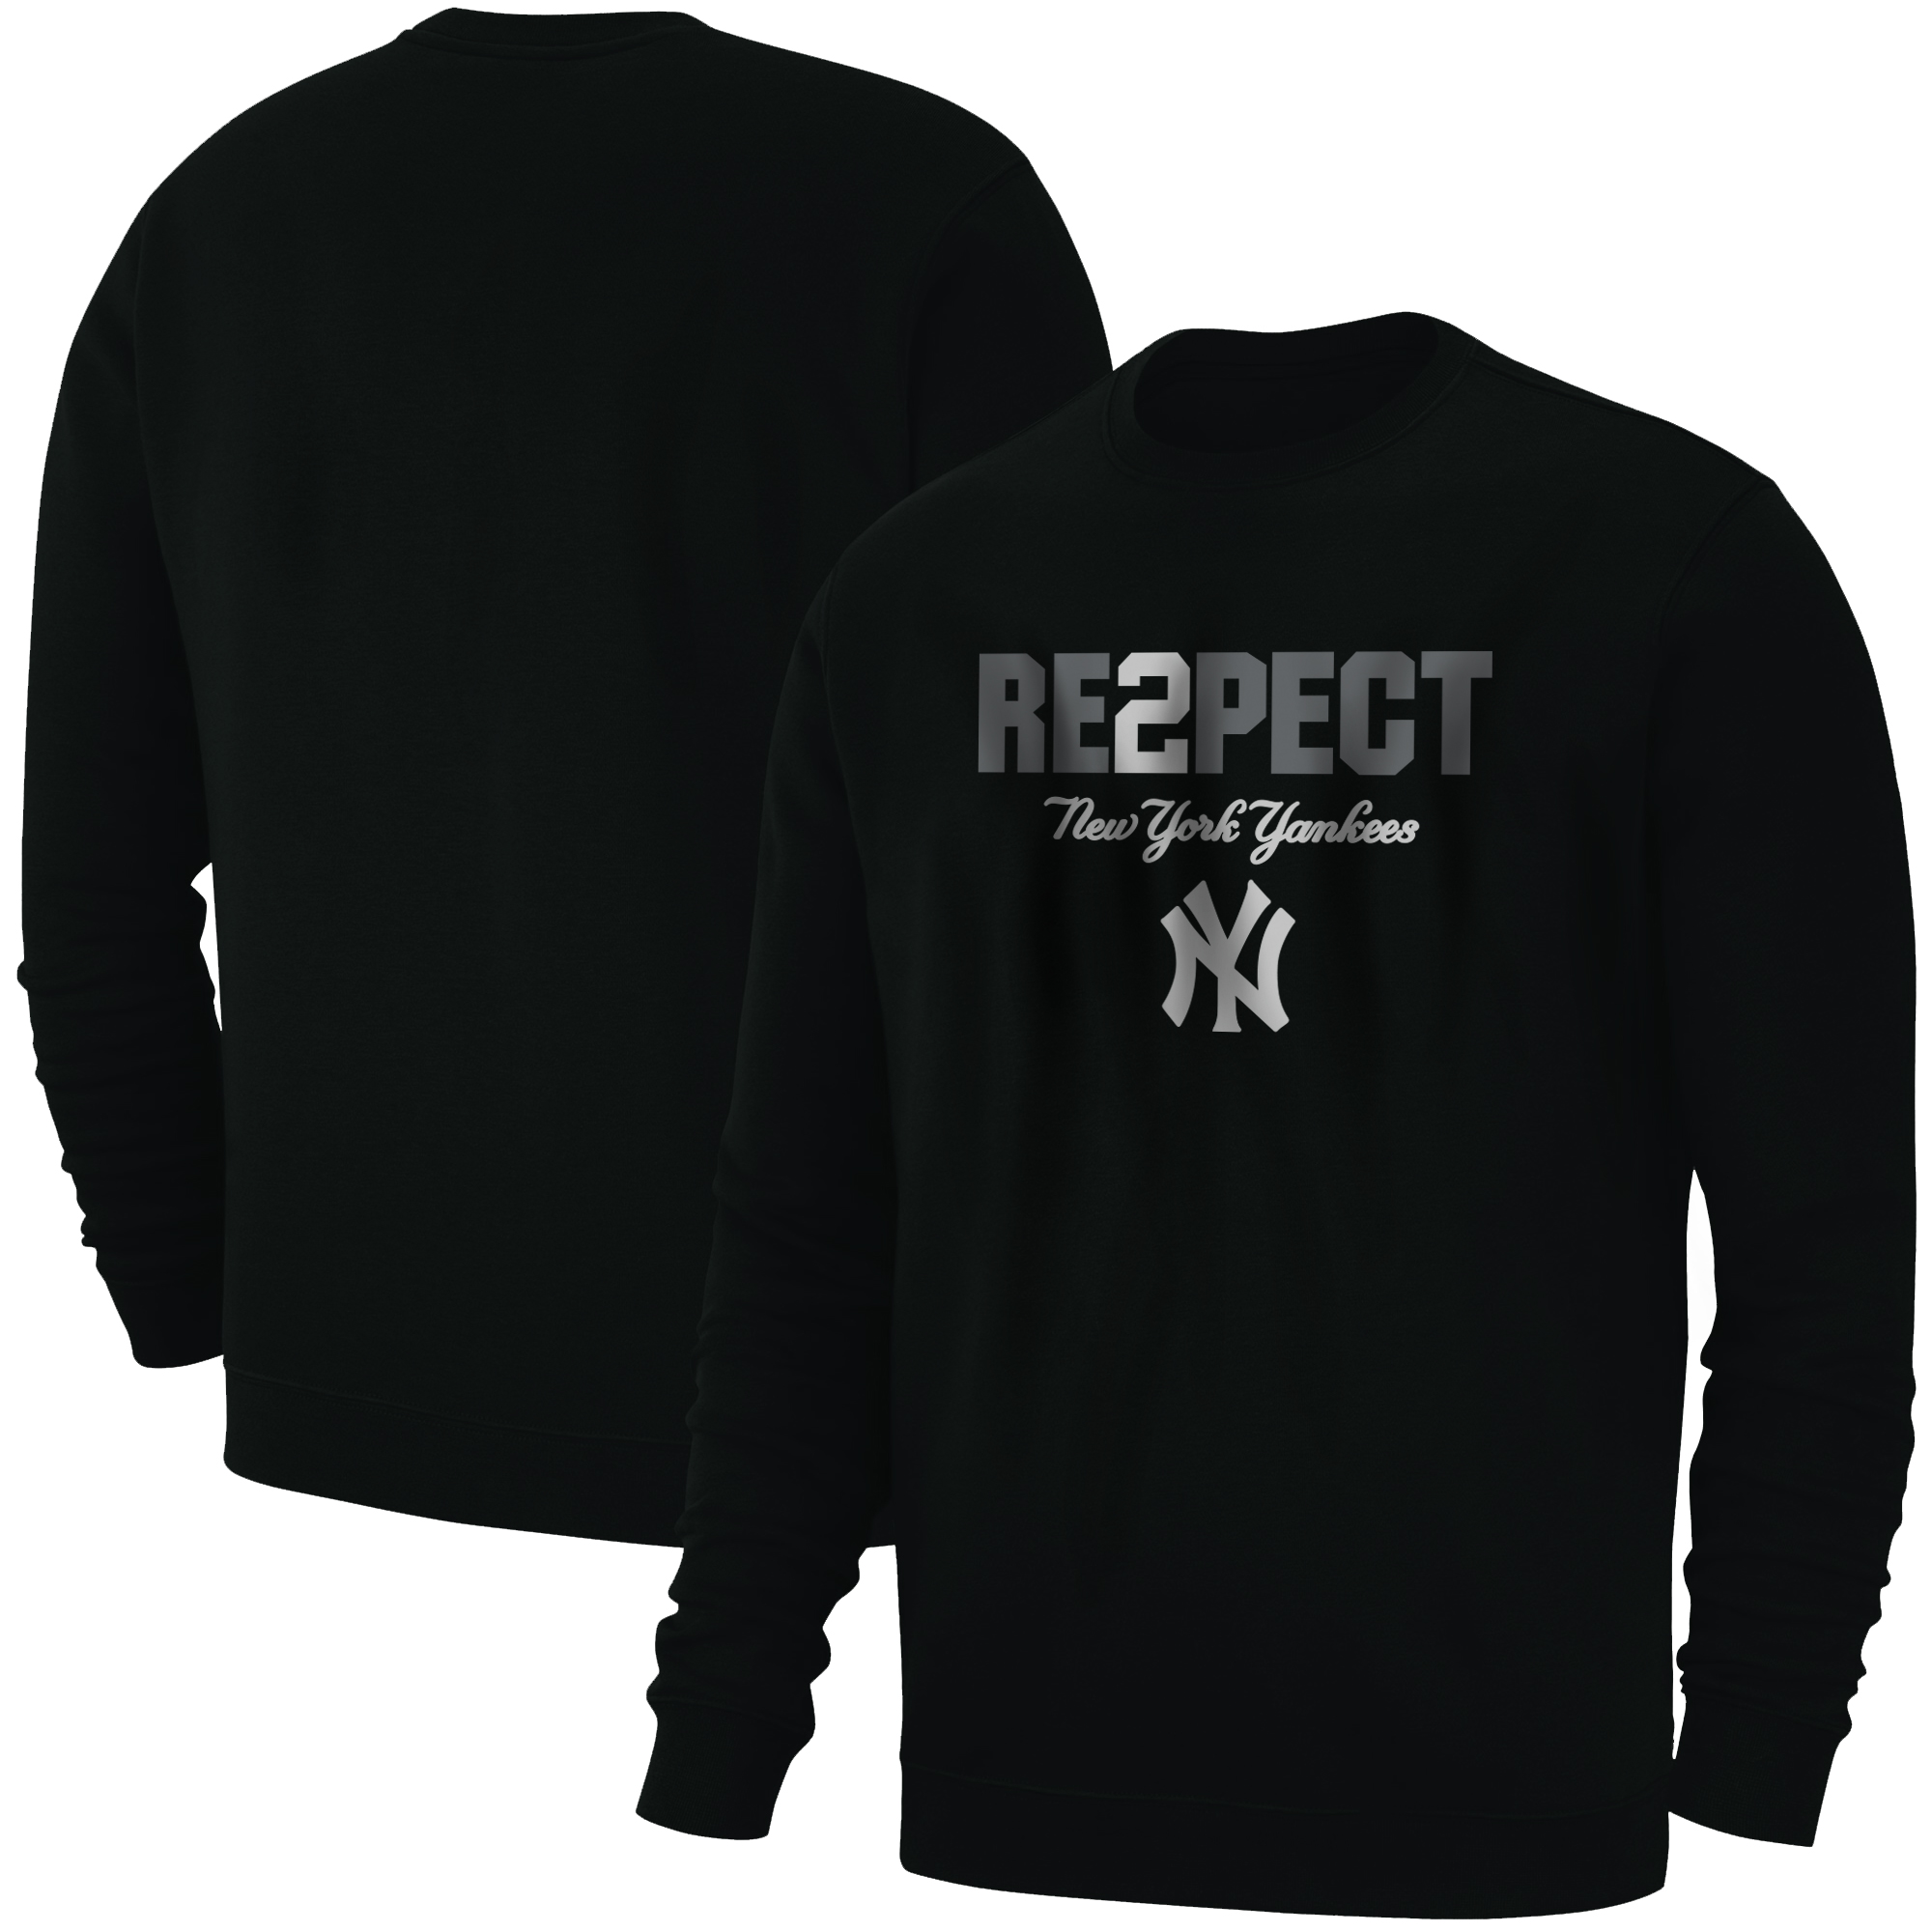 New York Yankees Re2pect Basic (BSC-BLU-817-Re2pect)